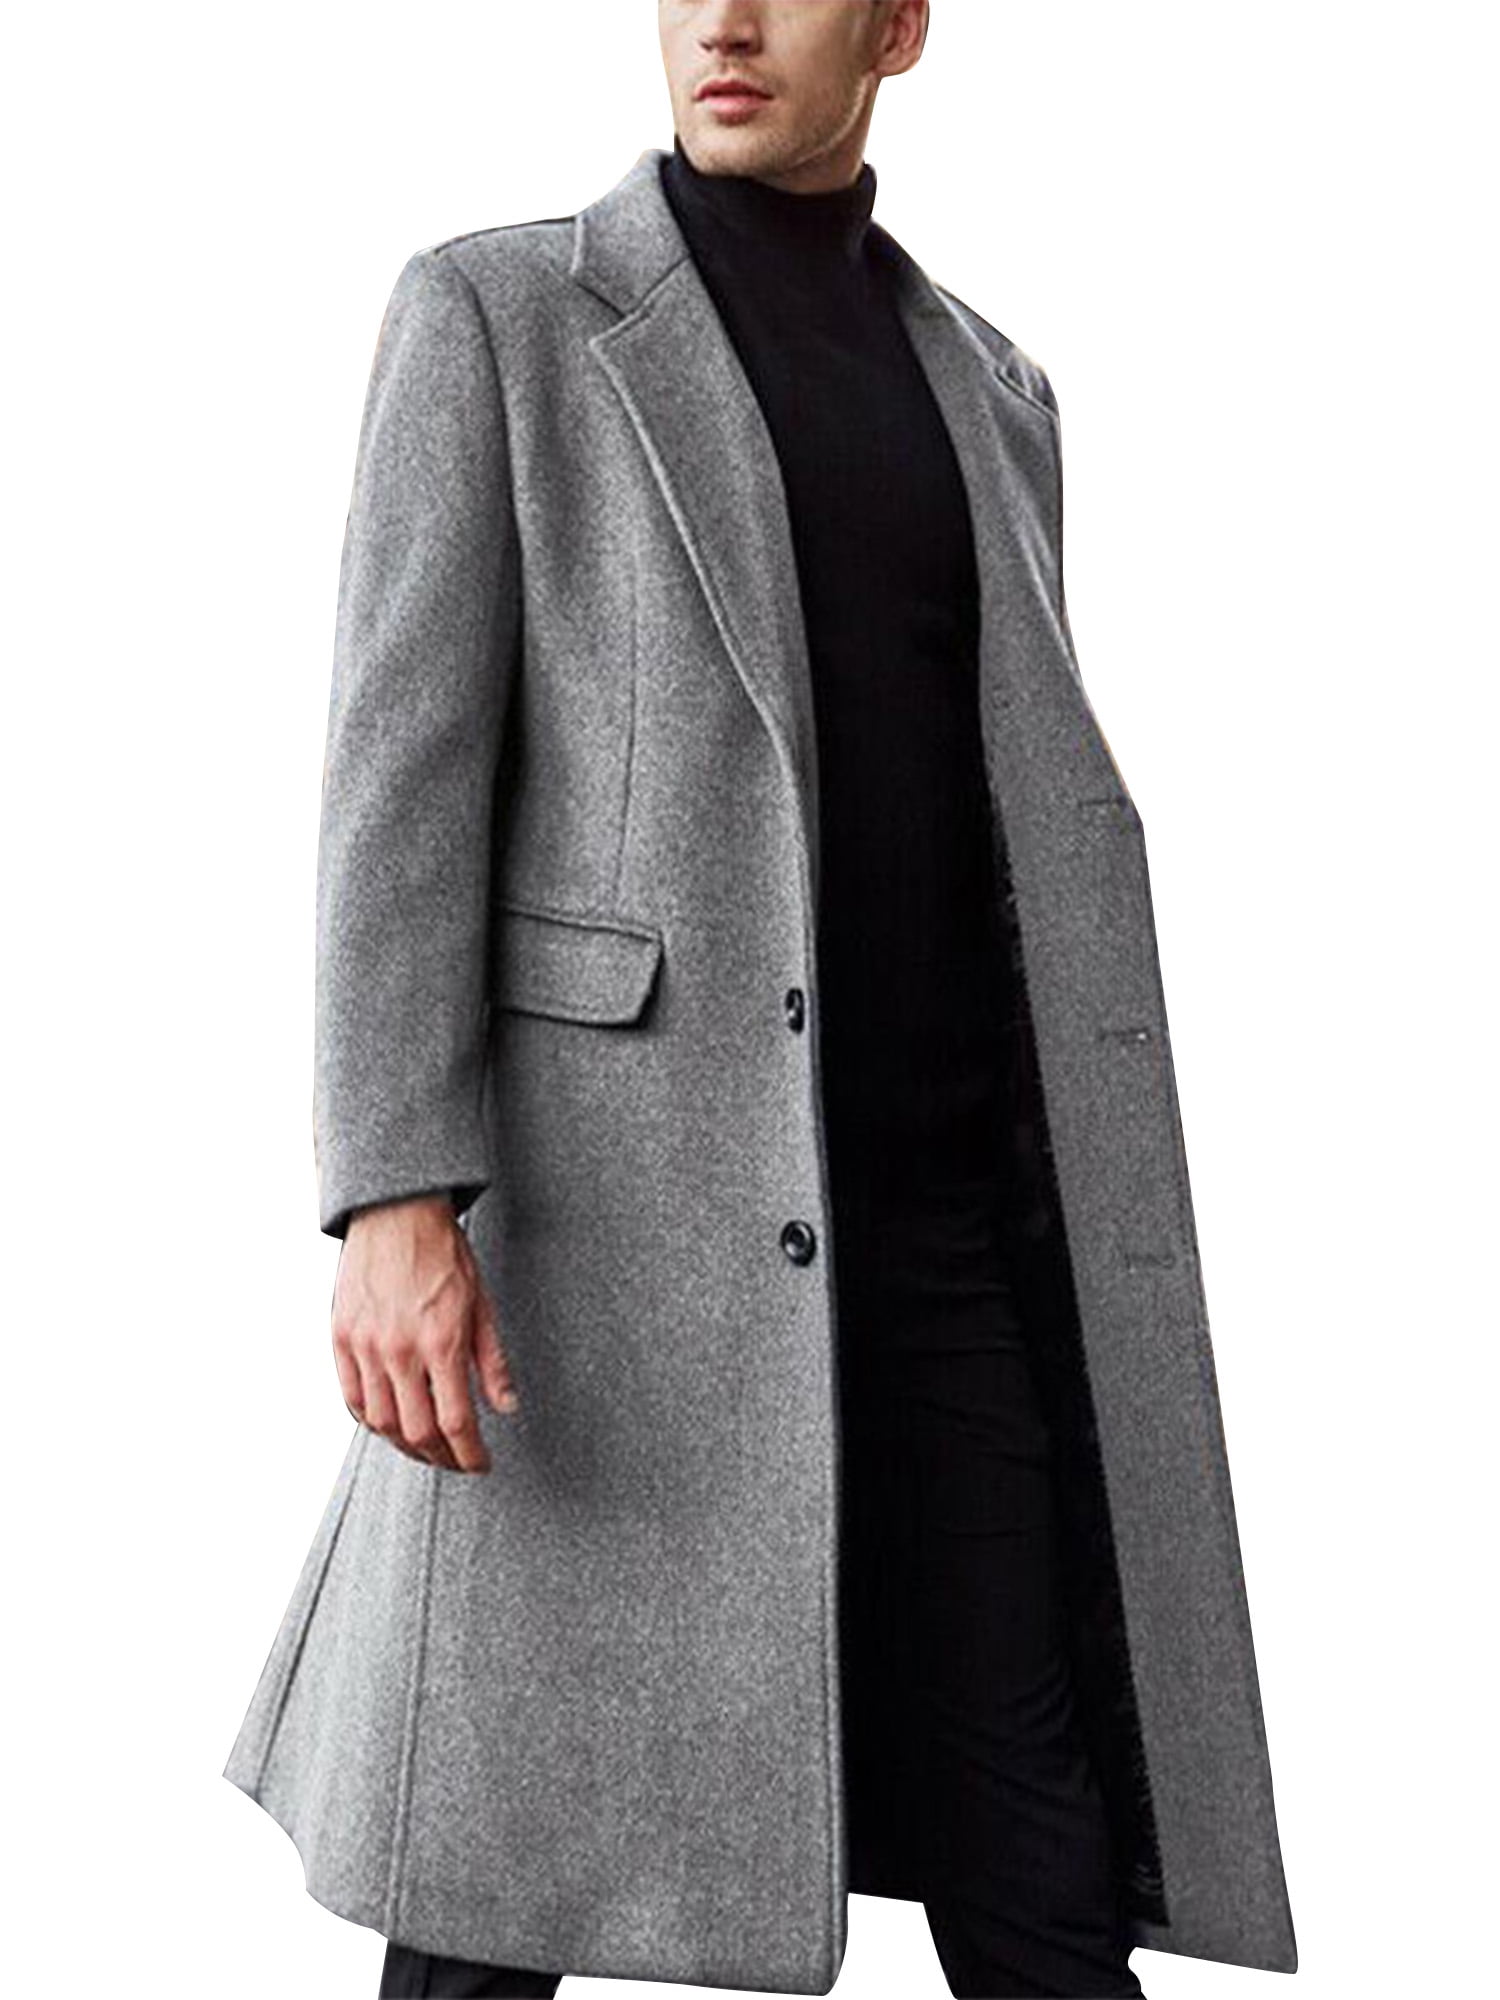 1*-Mens Jacket Outwear Casual Wool Blend Trench Overcoat Warm Long Coat Winter 